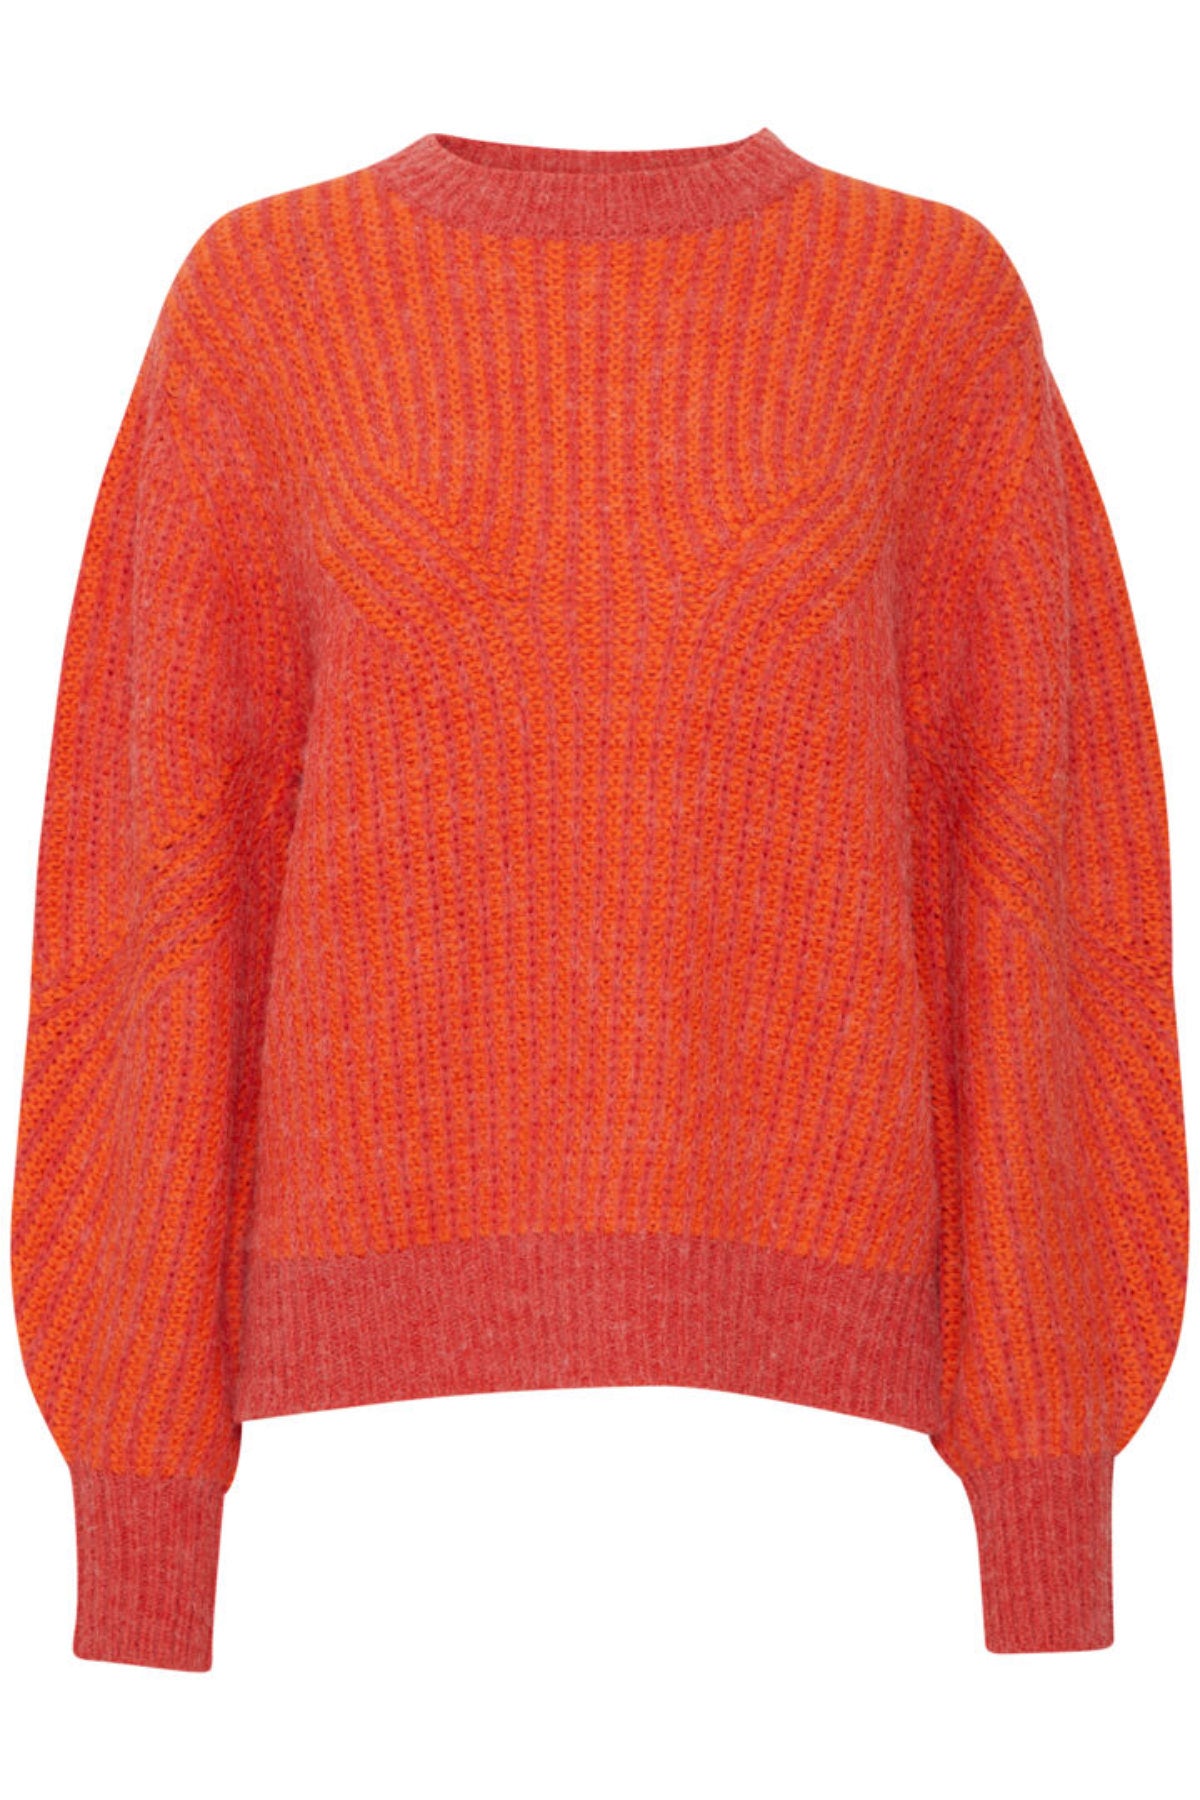 Millox jumper, orange